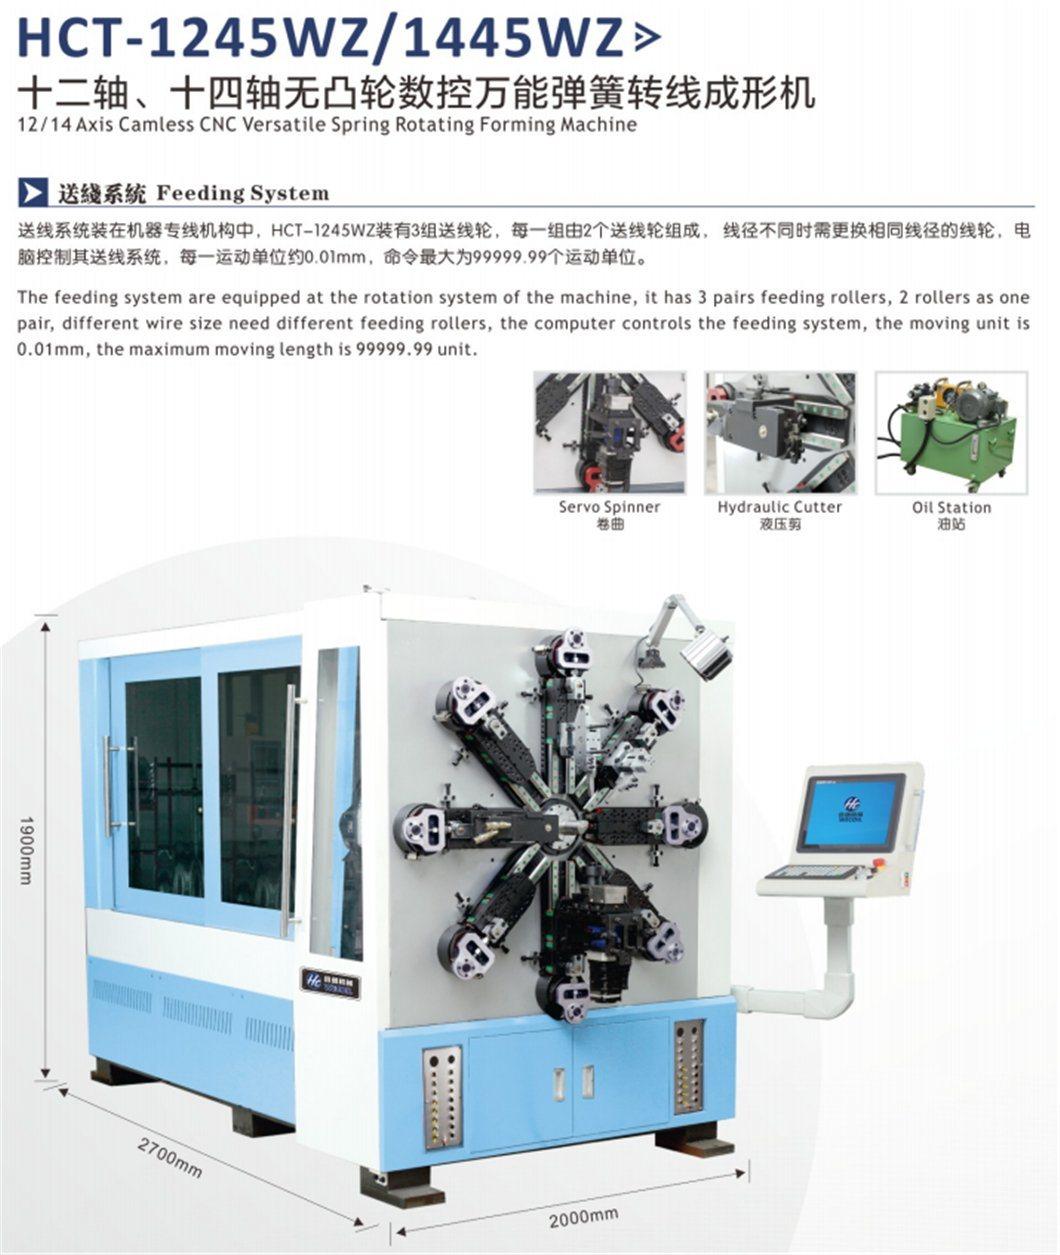 WECOIL HCT-1245WZ CNC Spiral Spring Making Machine